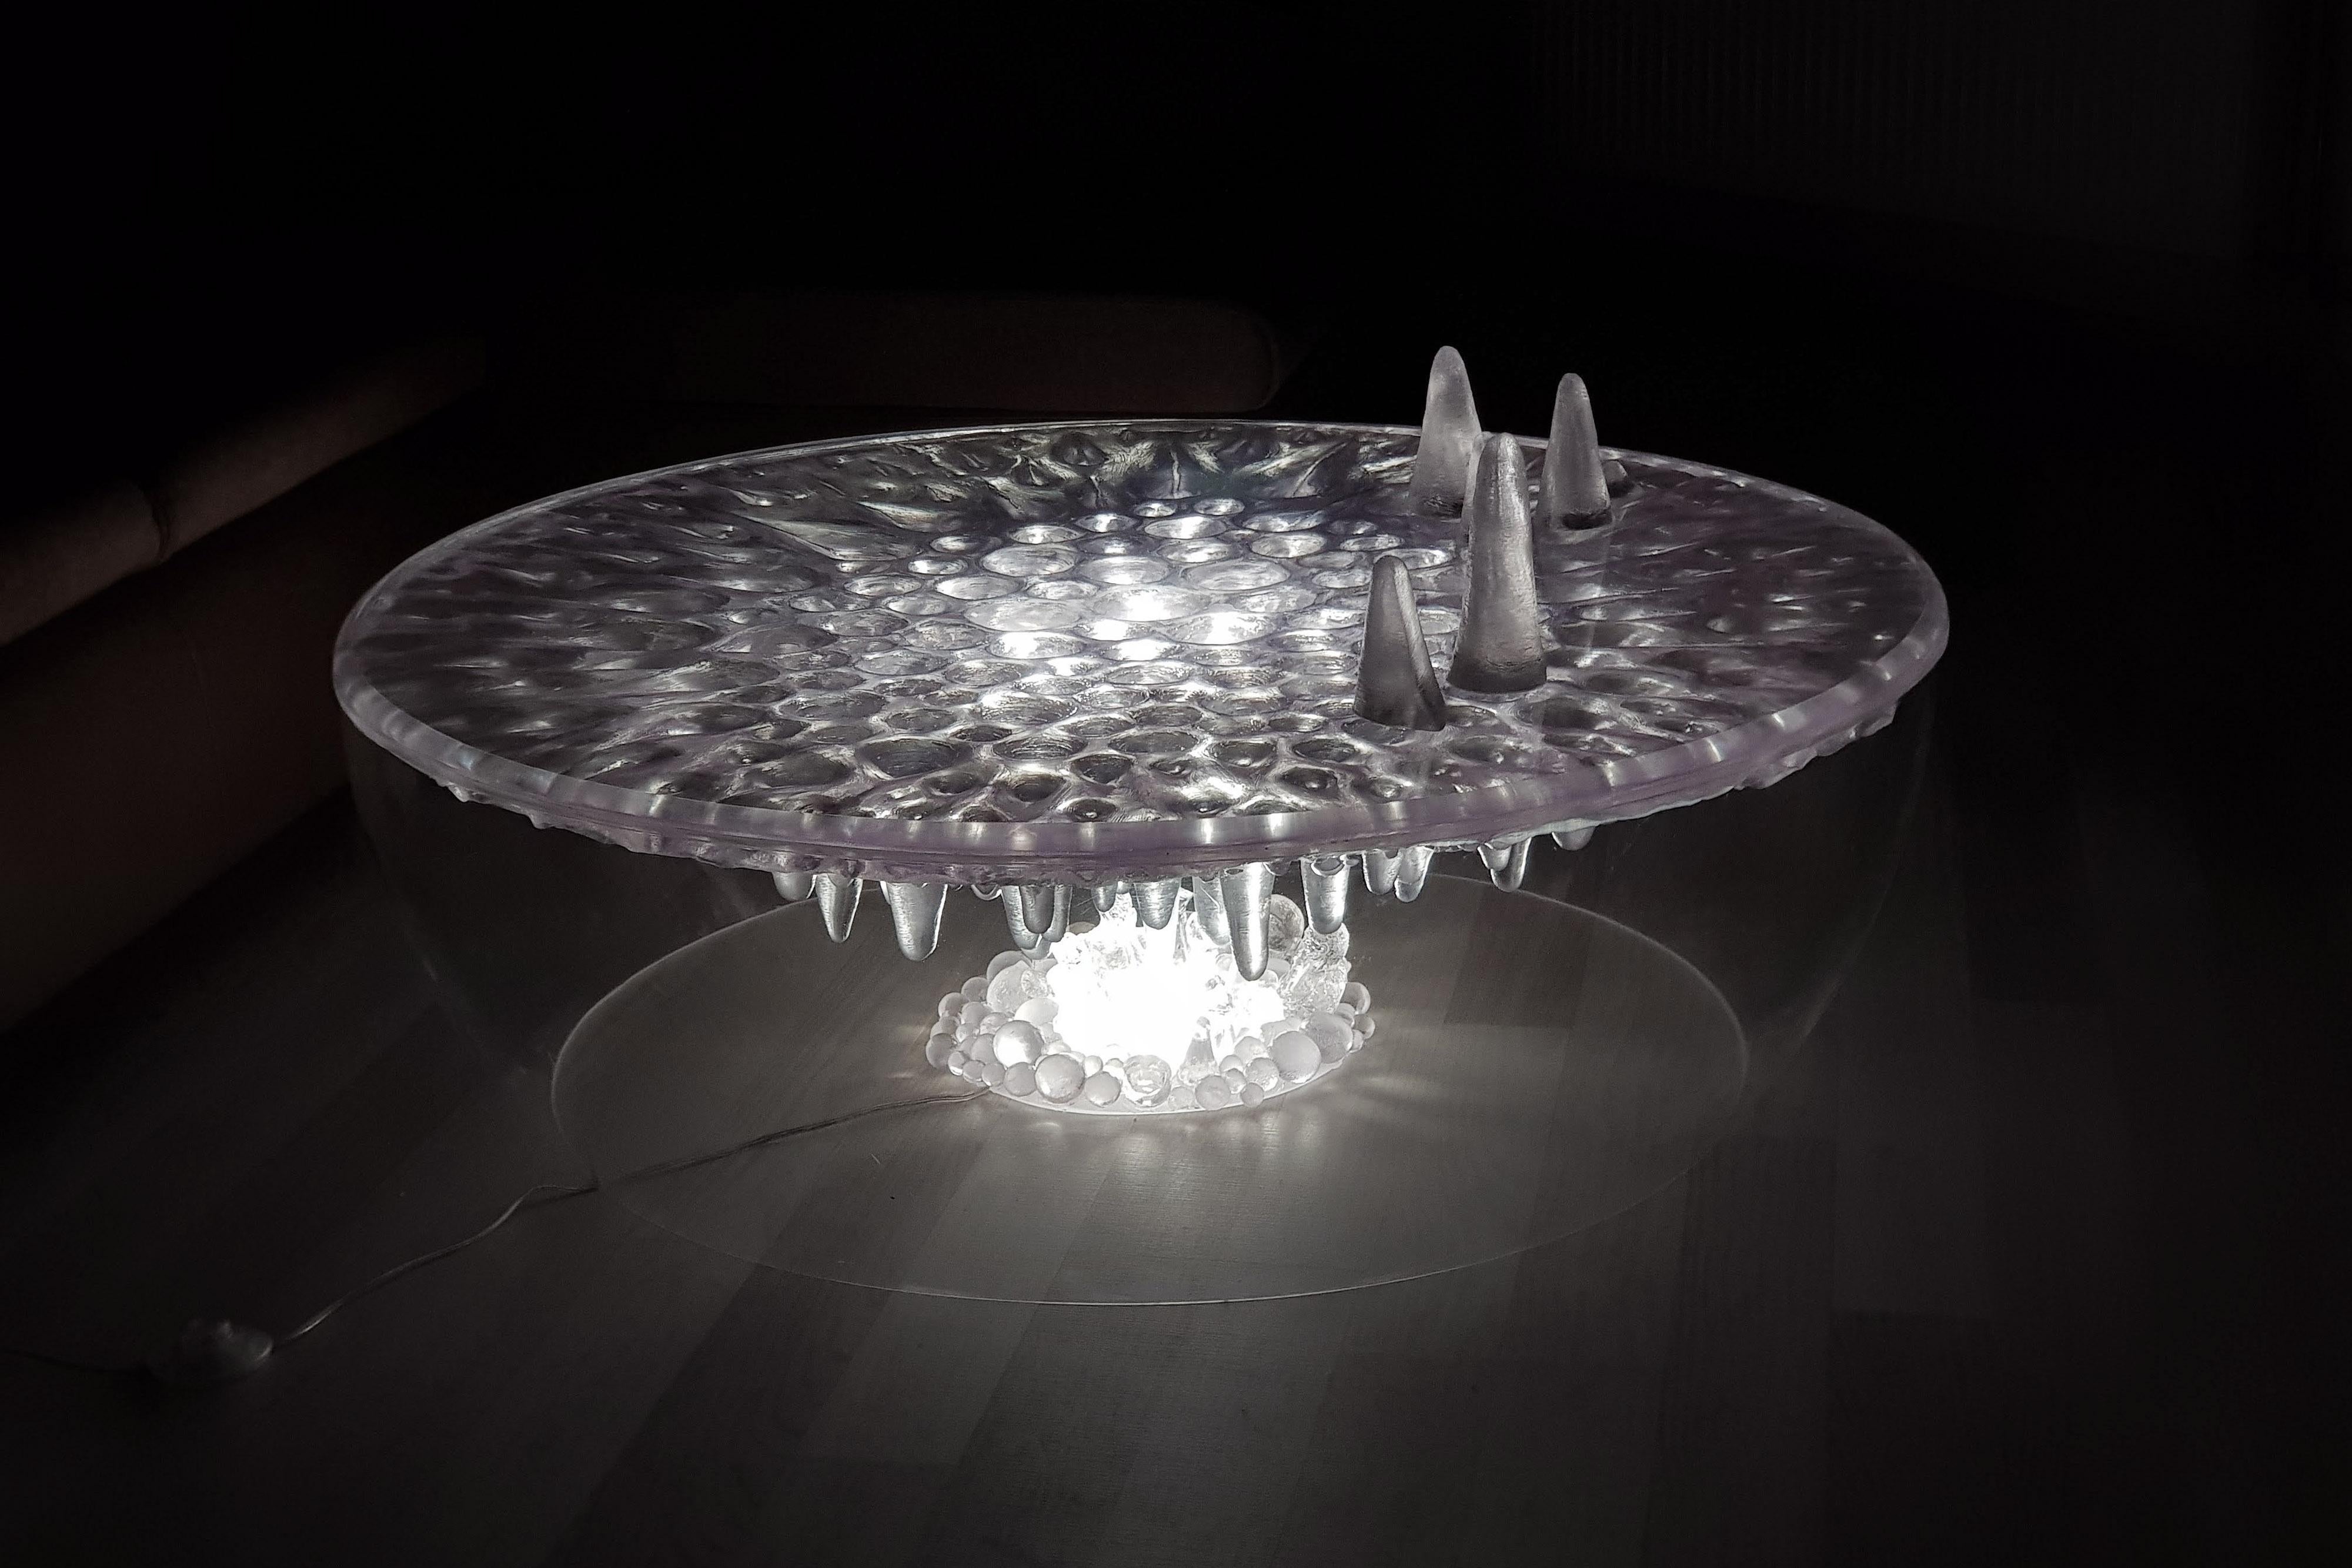 Balkan Hypnosis Coffee Table by Eduard Locota, illuminated Acrylic Glass / Resin design